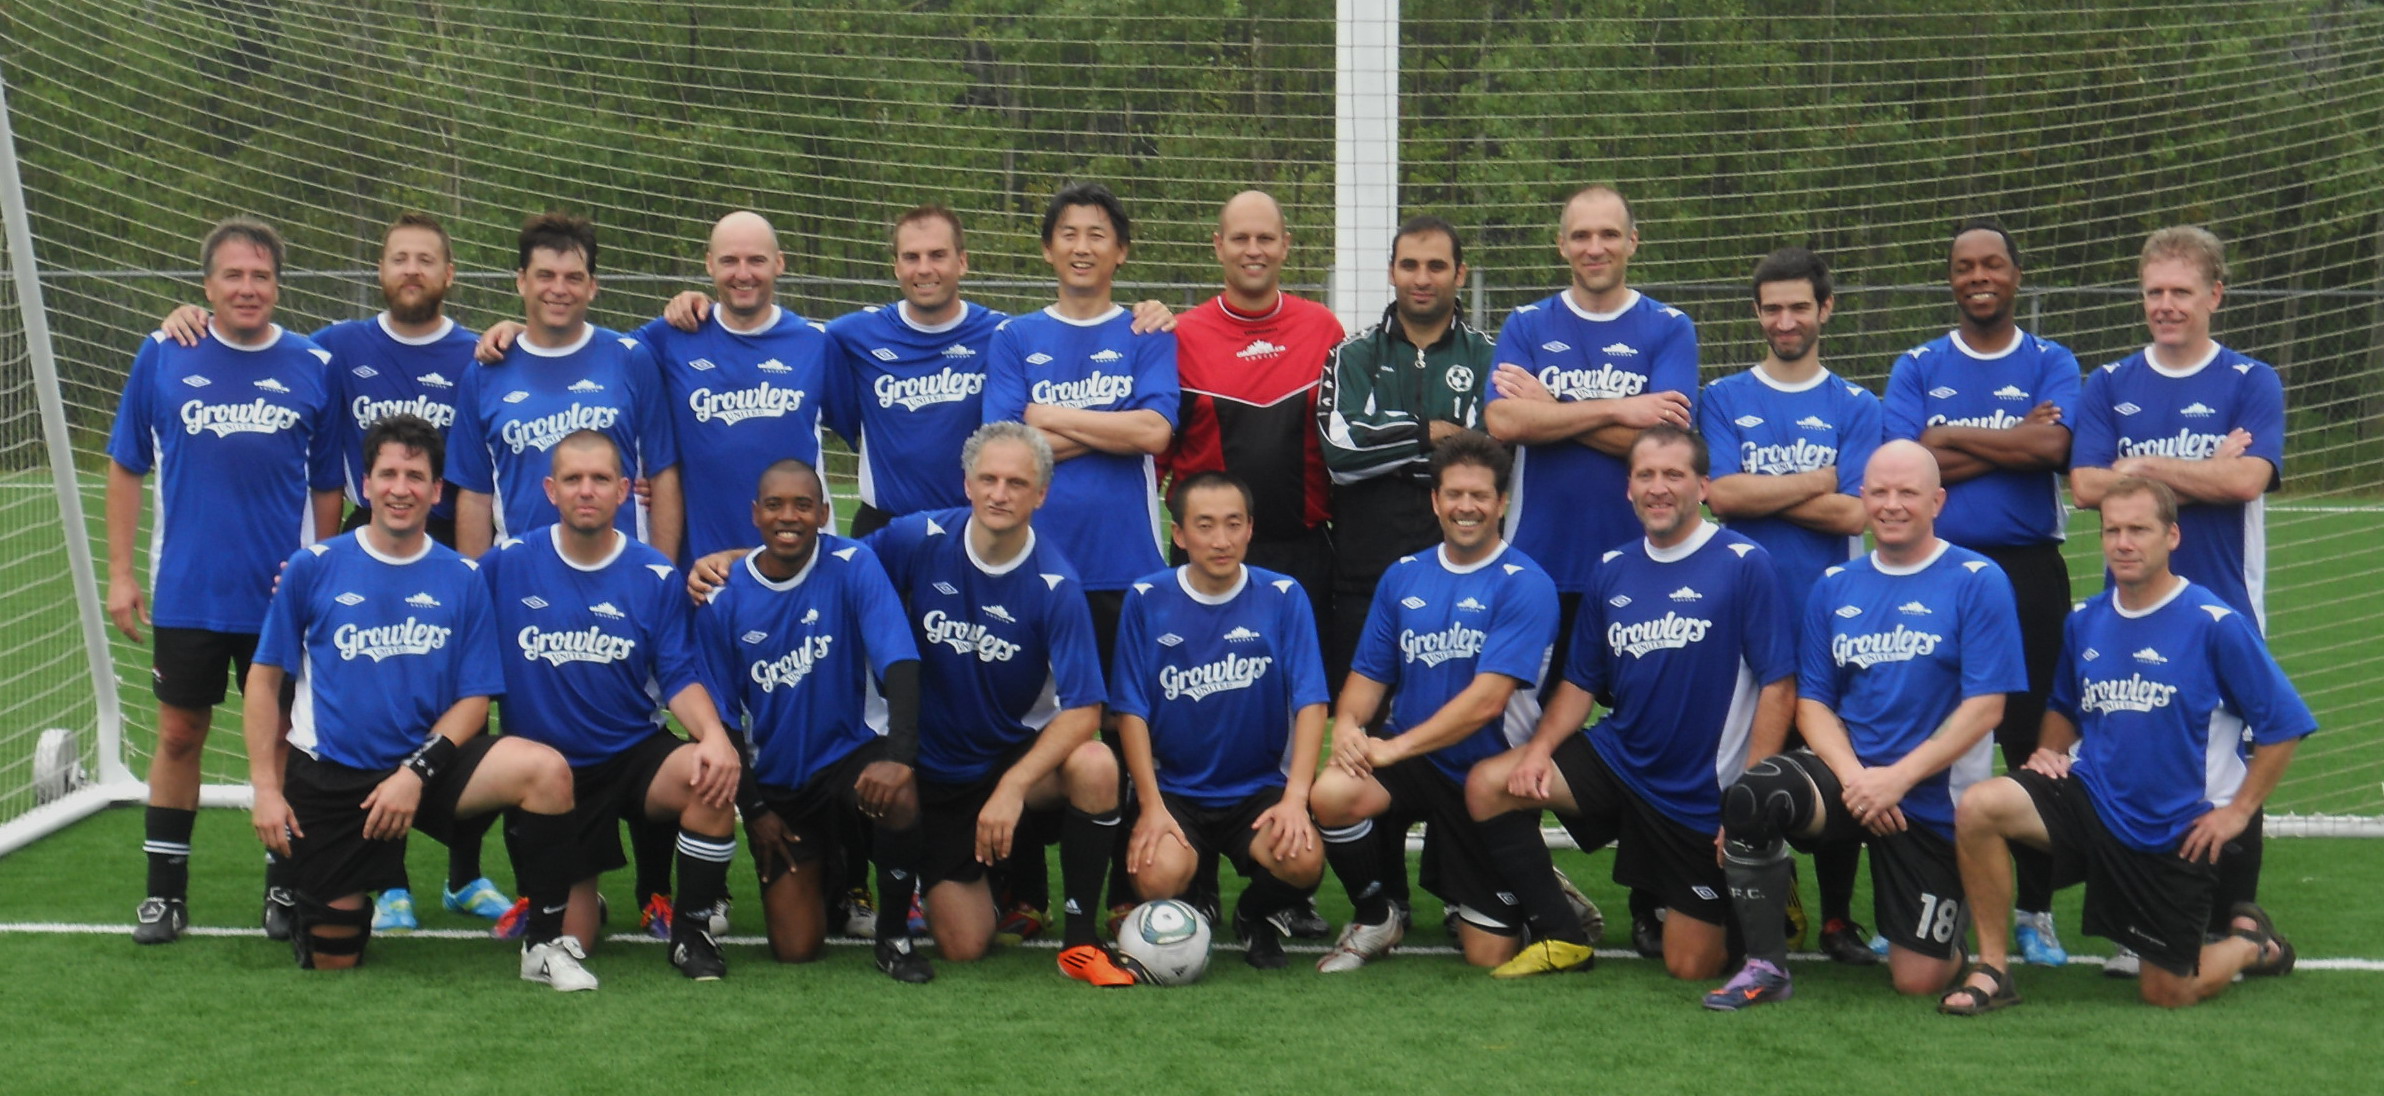 Old Boys' Soccer Club 2011 Prov Team